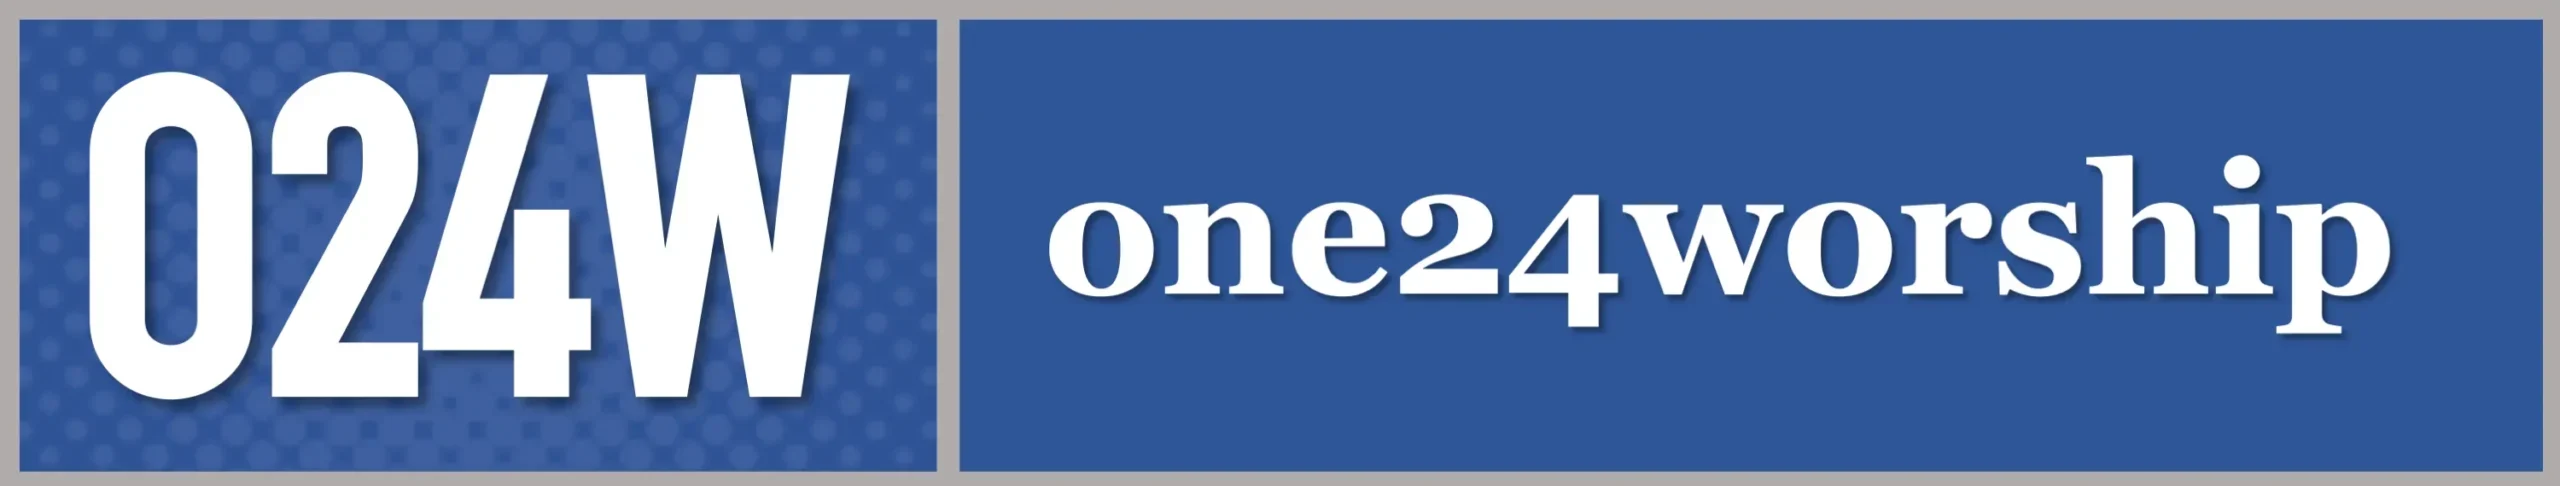 Image of one24worship Site Logo.